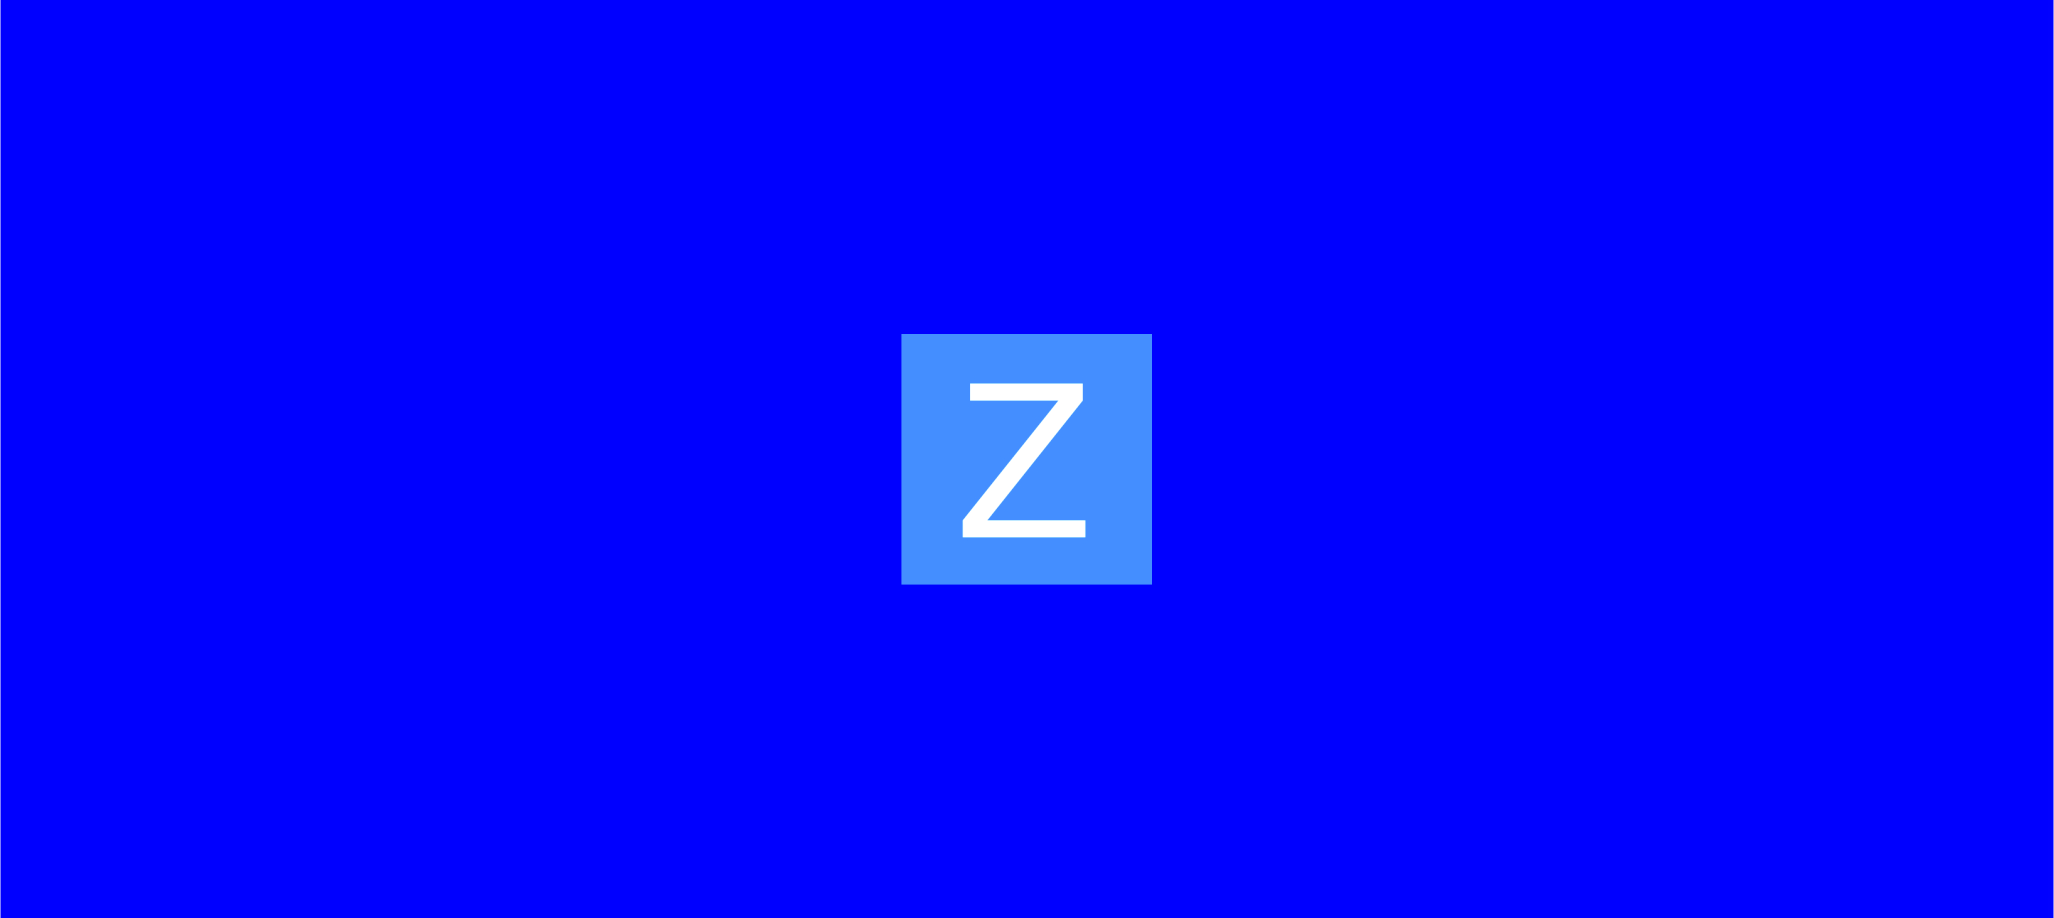 zencast logo design icon